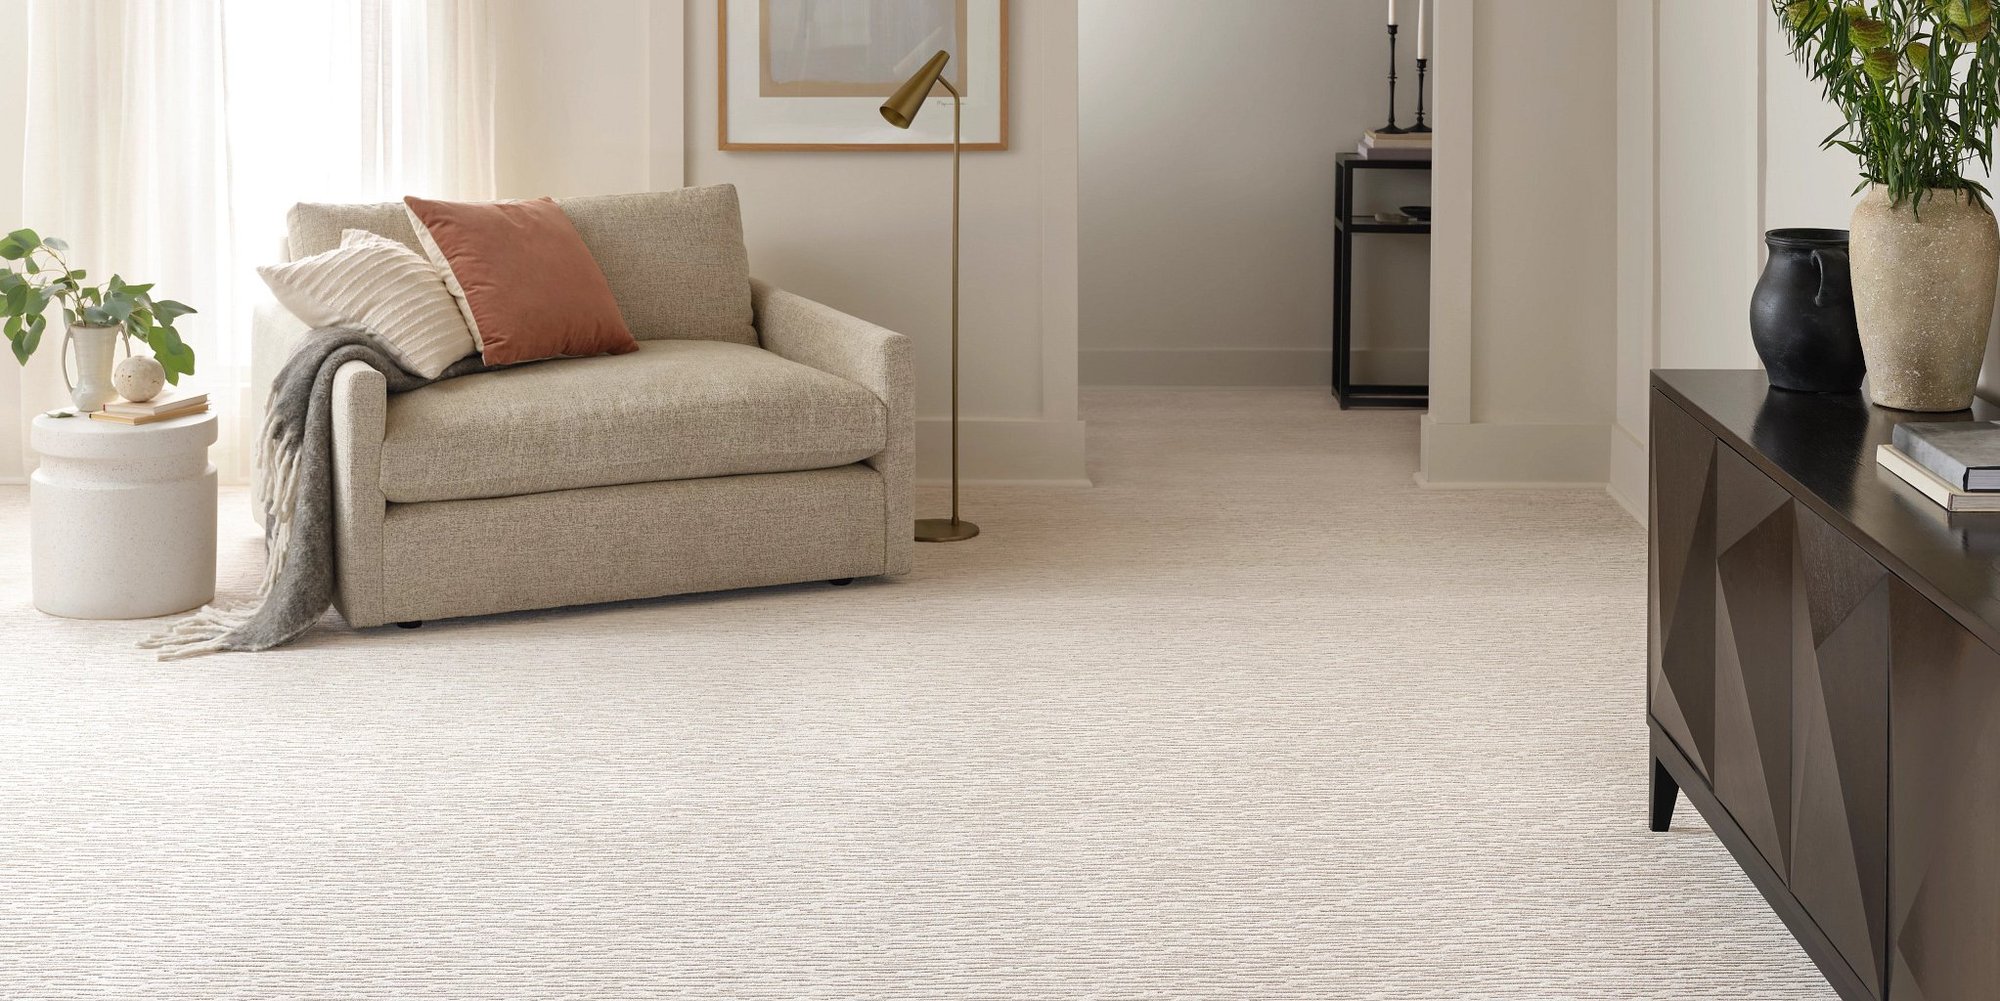 white carpet living room - Whitley Flooring and Design in AR